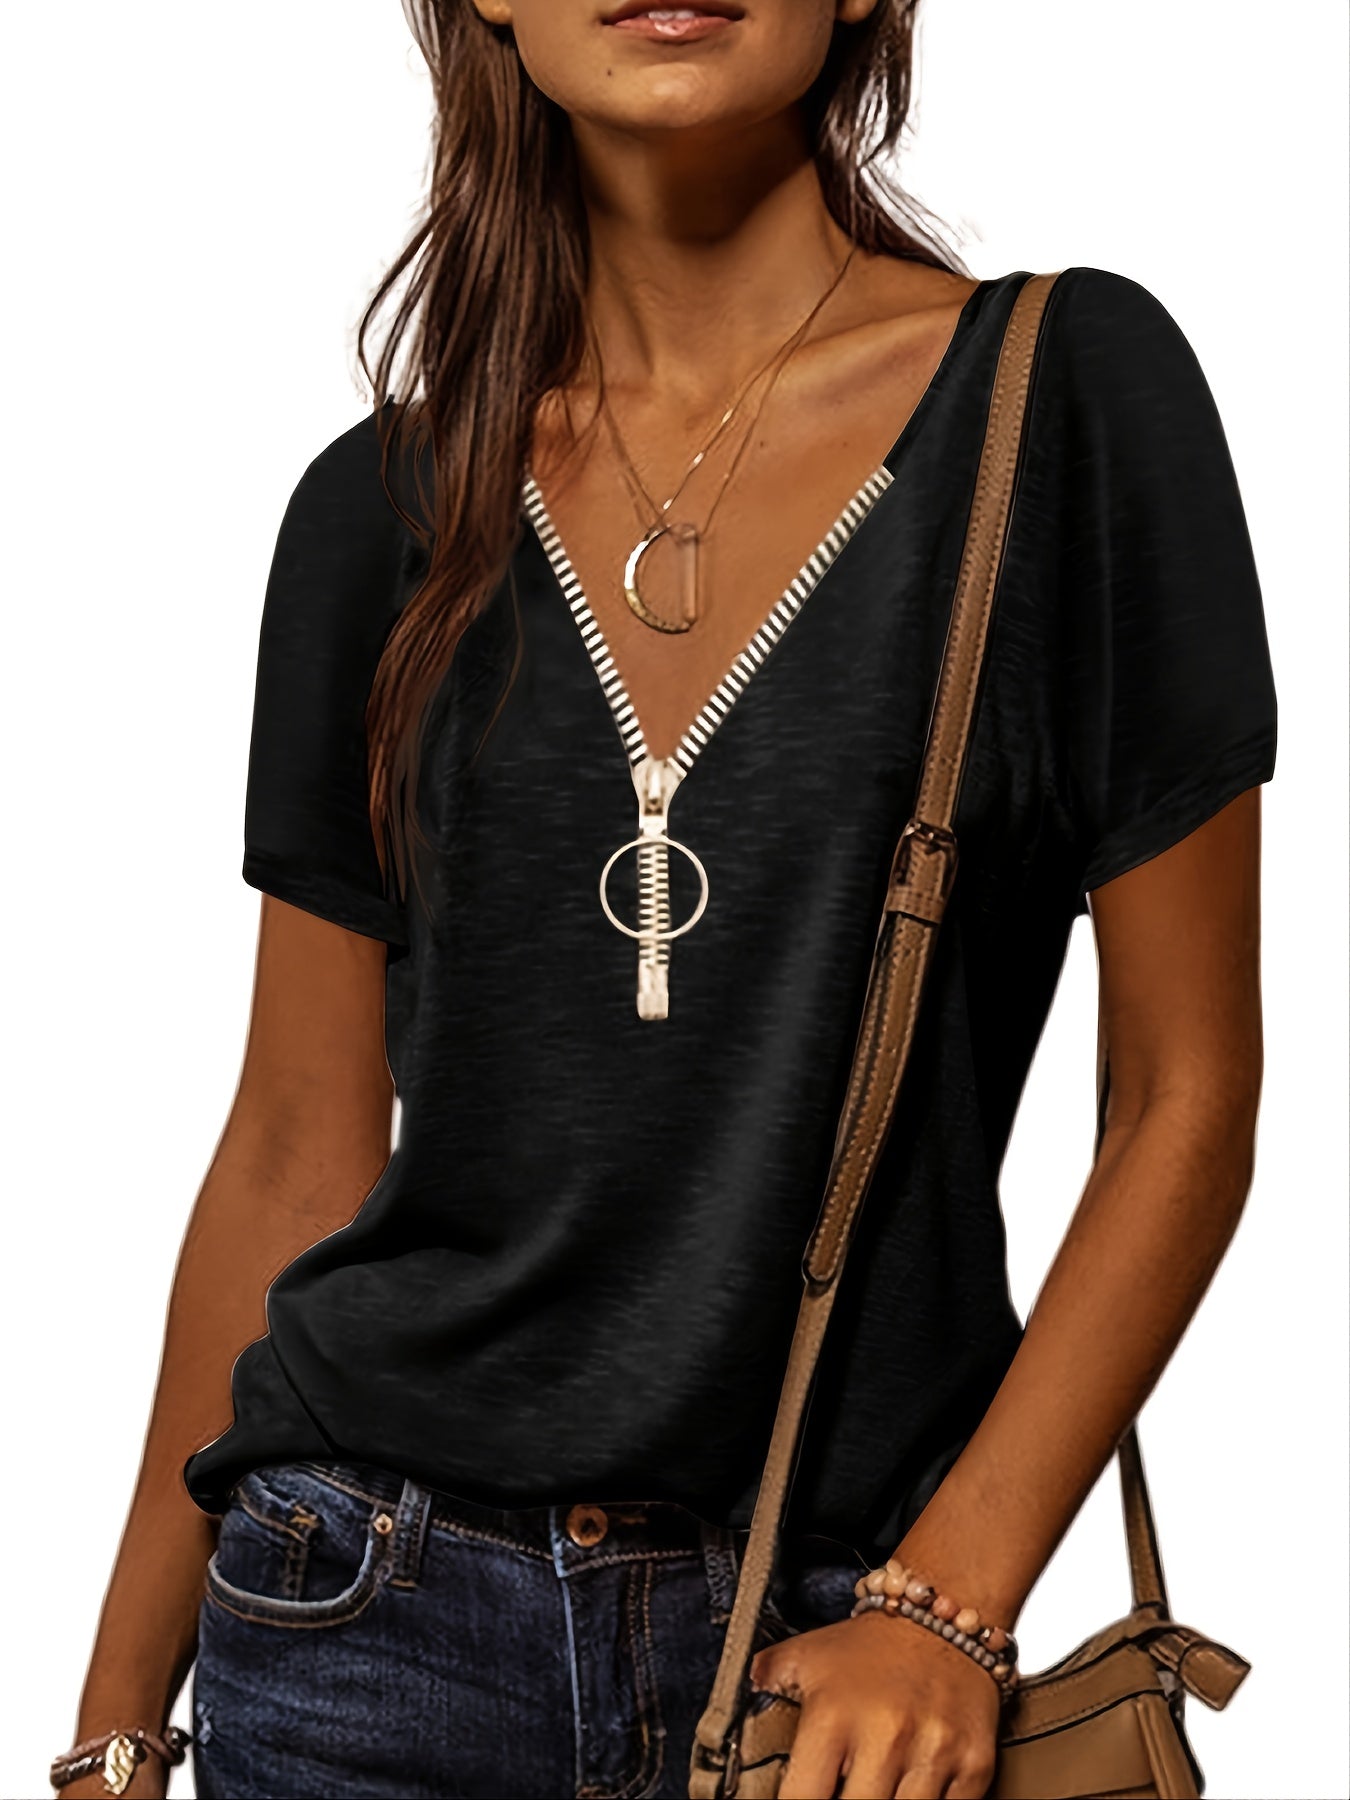 Vzyzv Casual V-neck Zipper T-shirt, Loose Short Sleeve Fashion Summer T-Shirts Tops, Women's Clothing